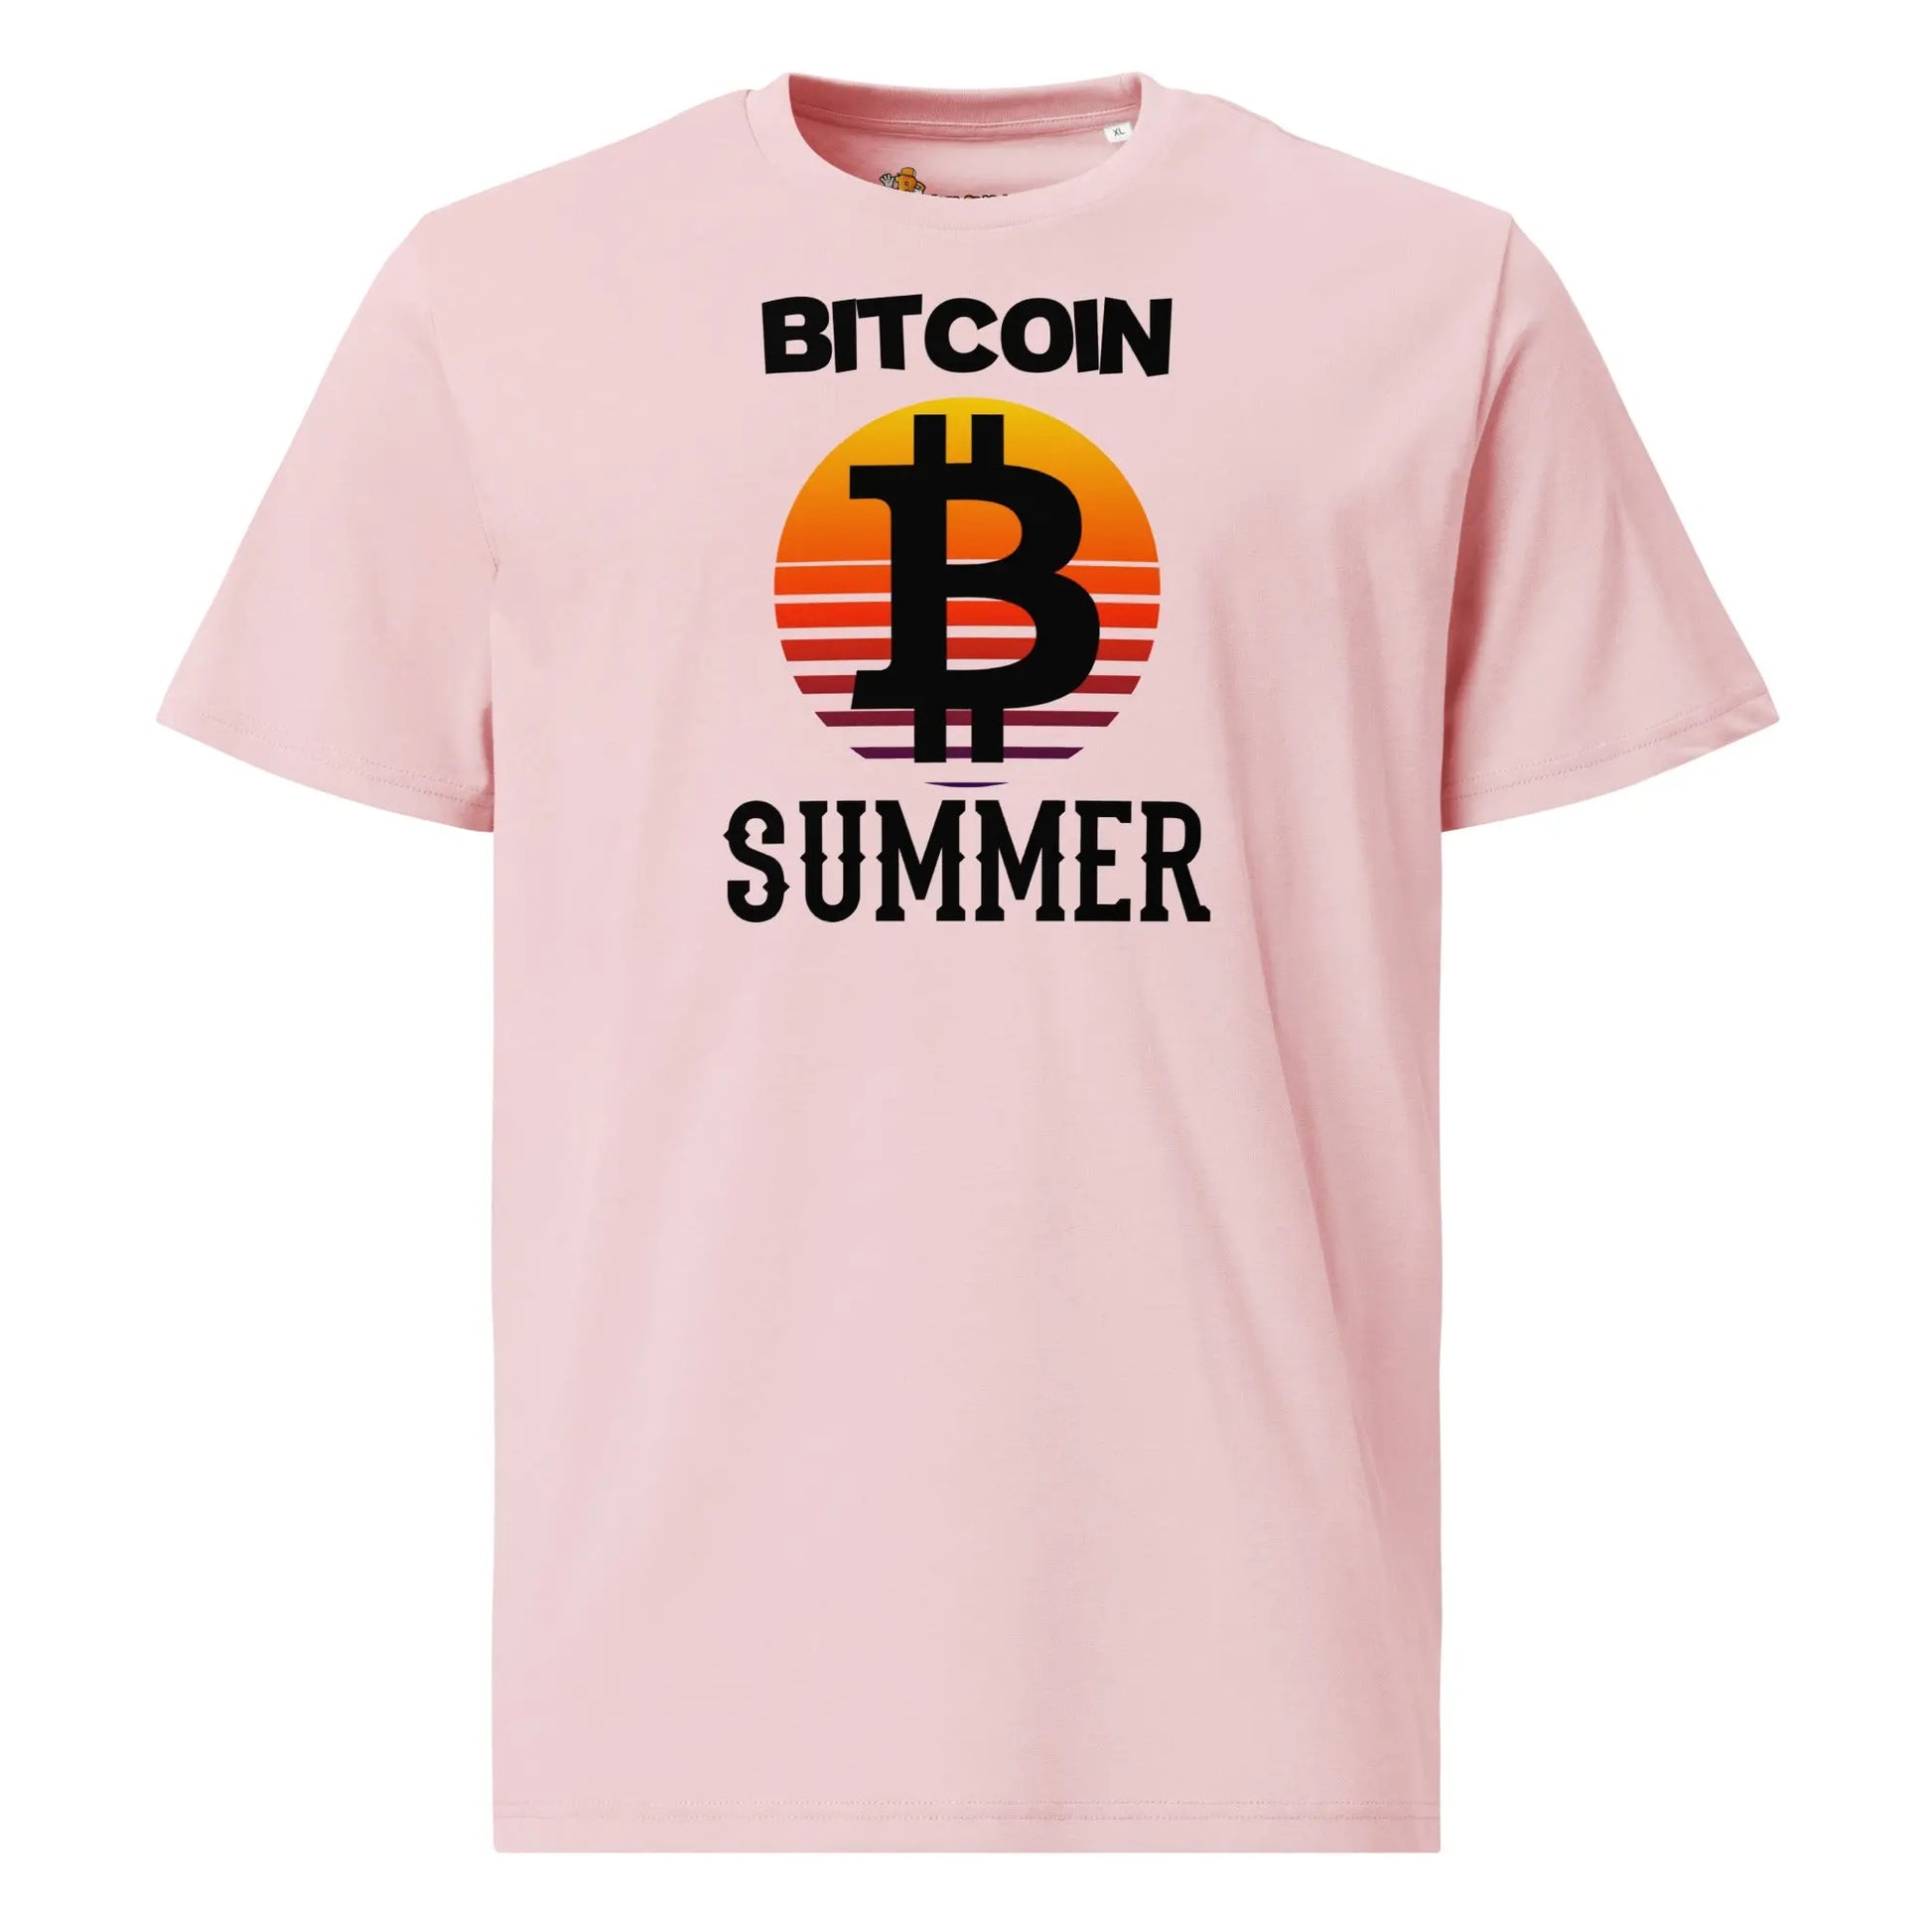 Bitcoin Summer - Premium Unisex Organic Cotton Bitcoin T-shirt Pink Color